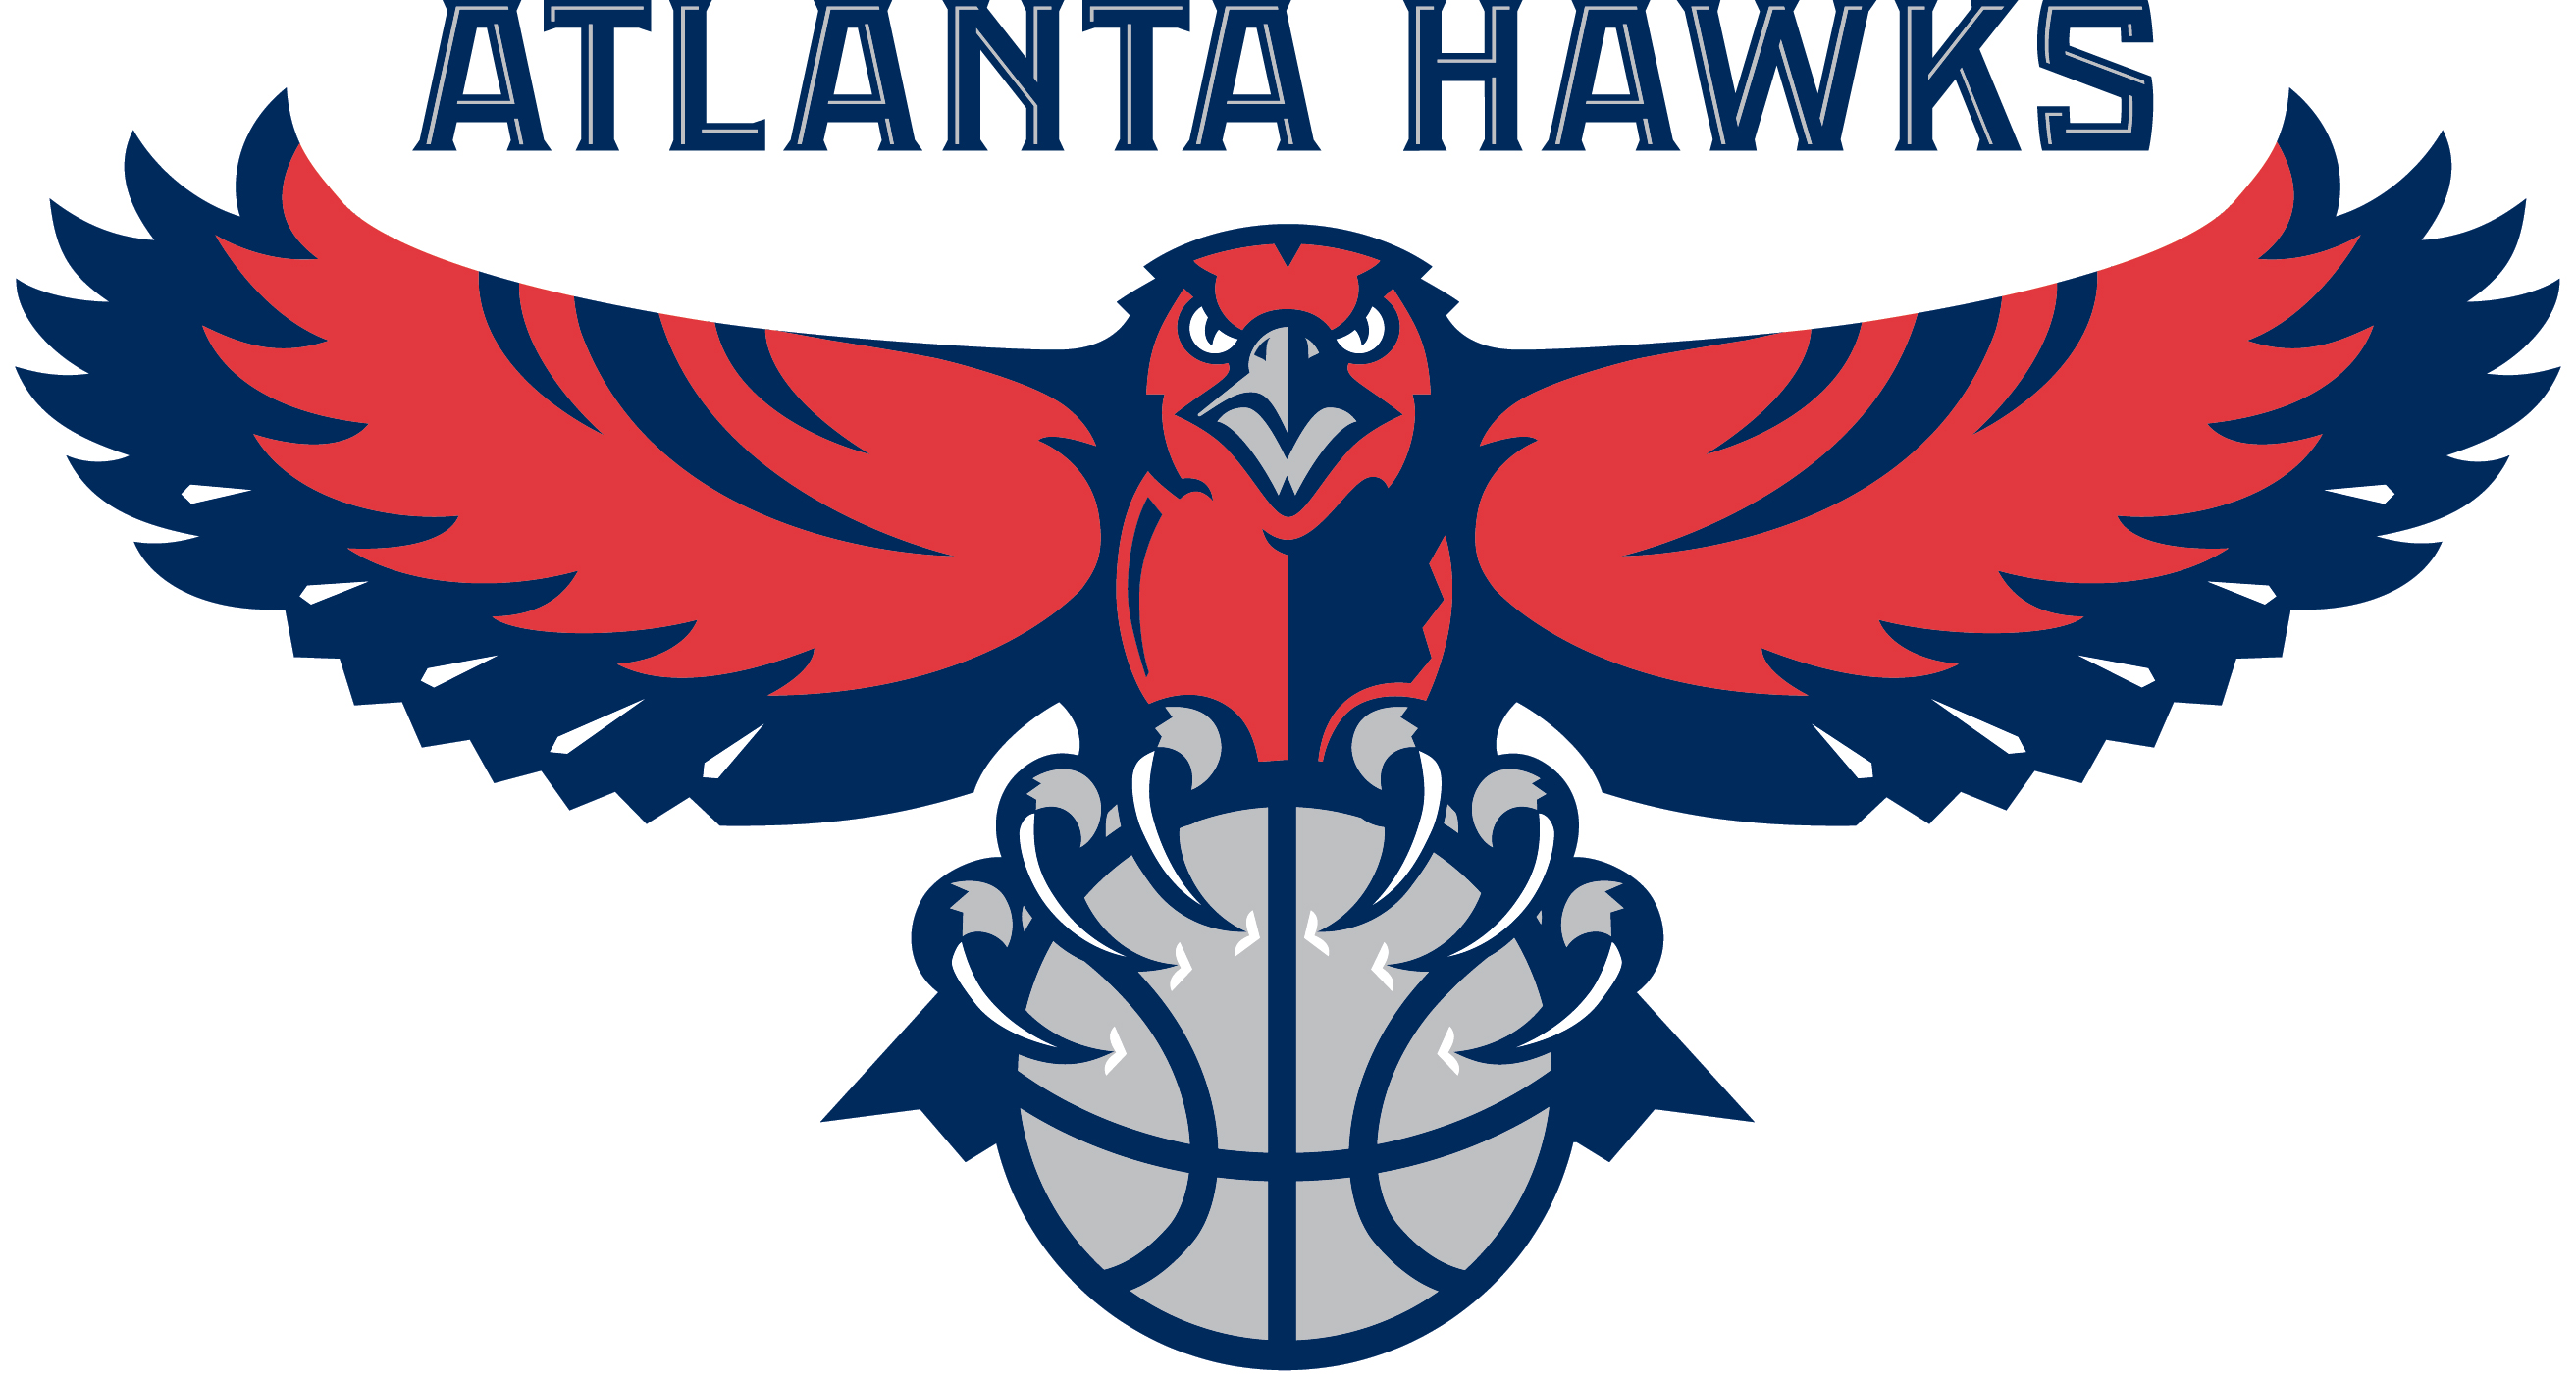 Atlanta Hawks Nba Basketball Wallpaper Background